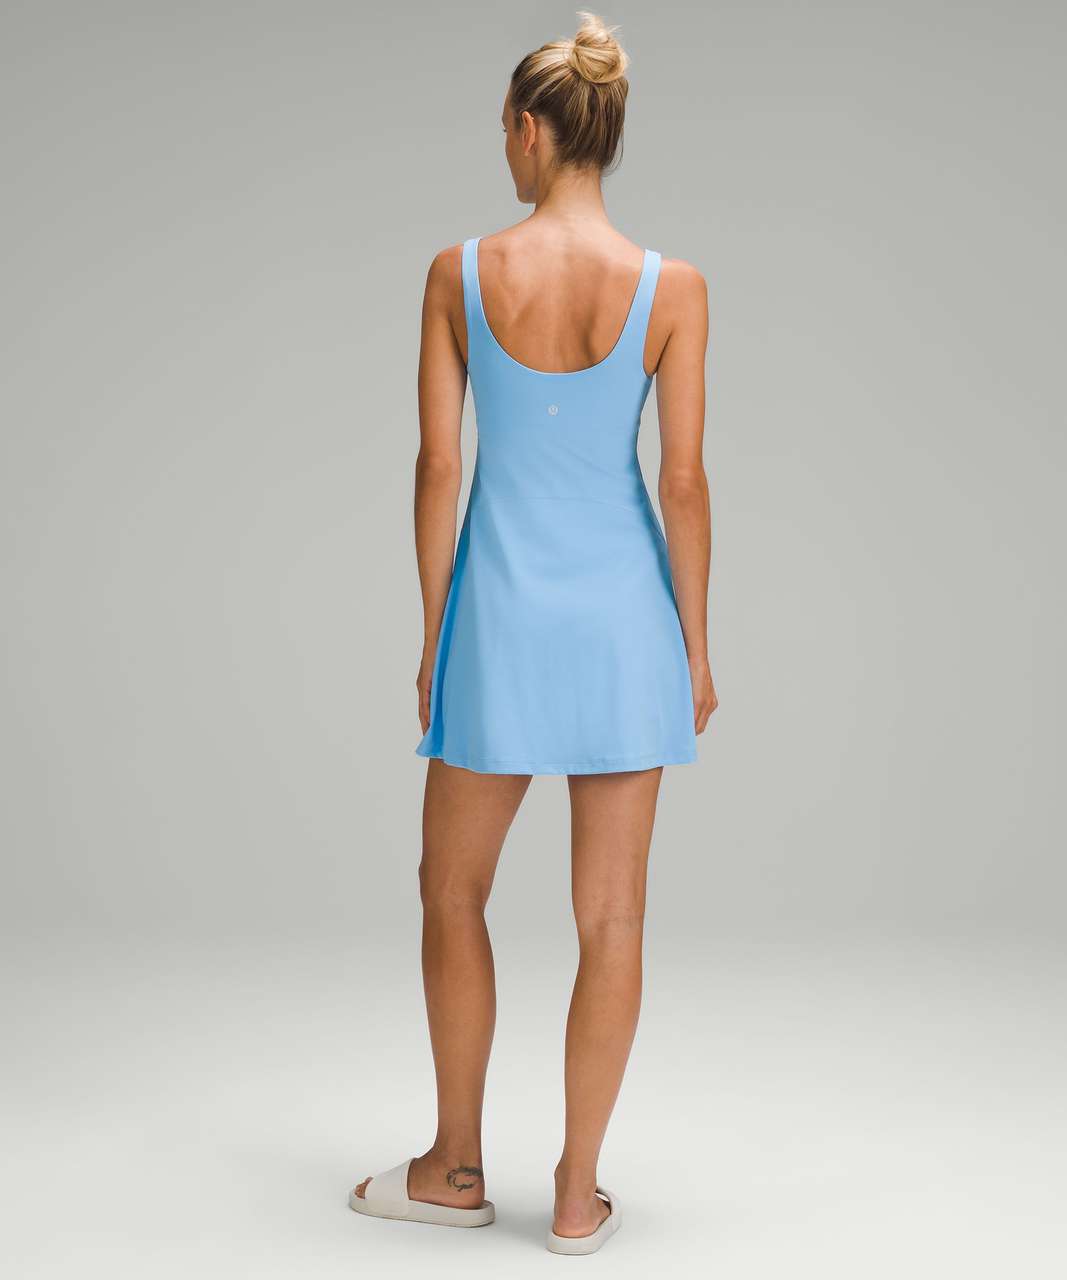 Track lululemon Align™ Dress - Sheer Blue - 8 at Lululemon